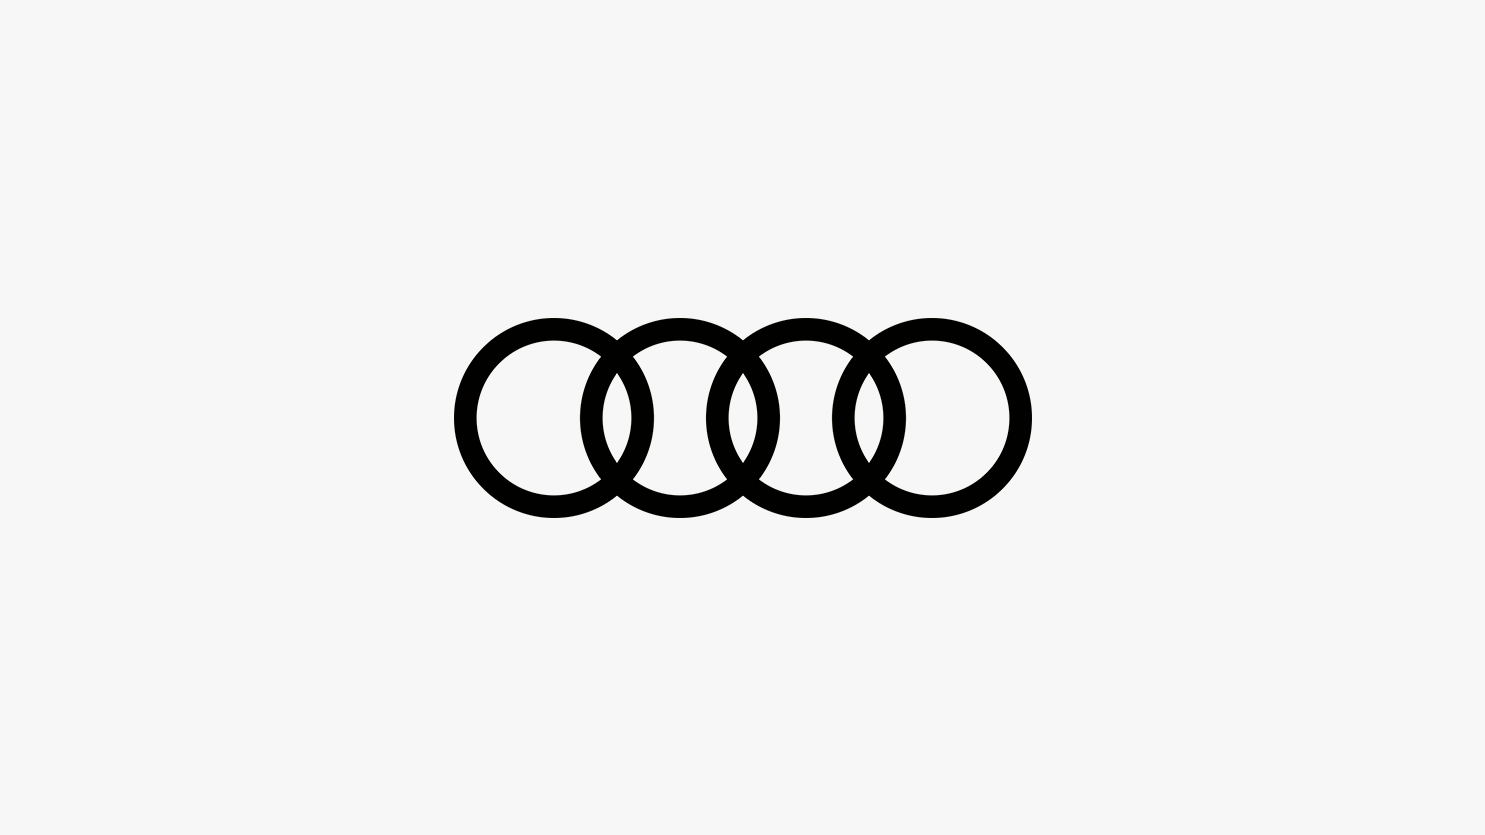 Audi project - Professional work